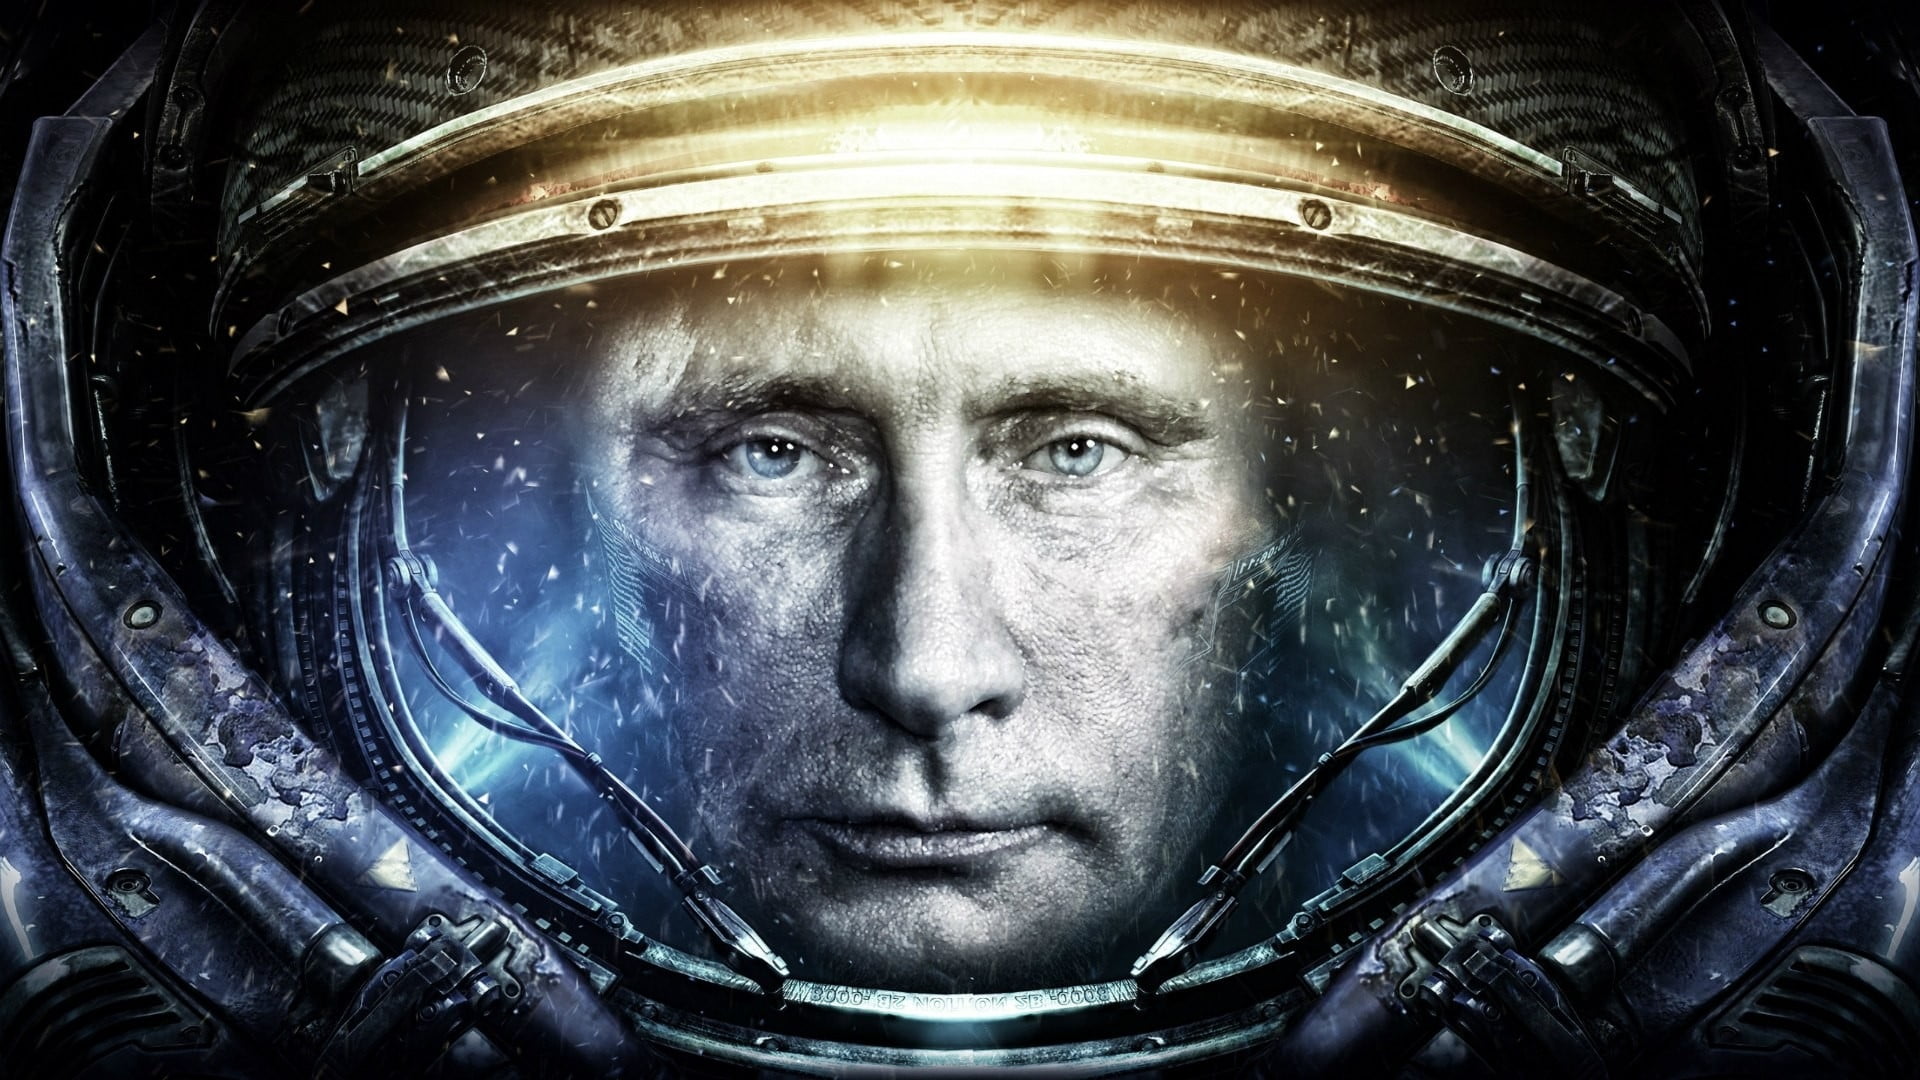 man inside astronaut suit wallpaper, humor, the suit, Putin, President